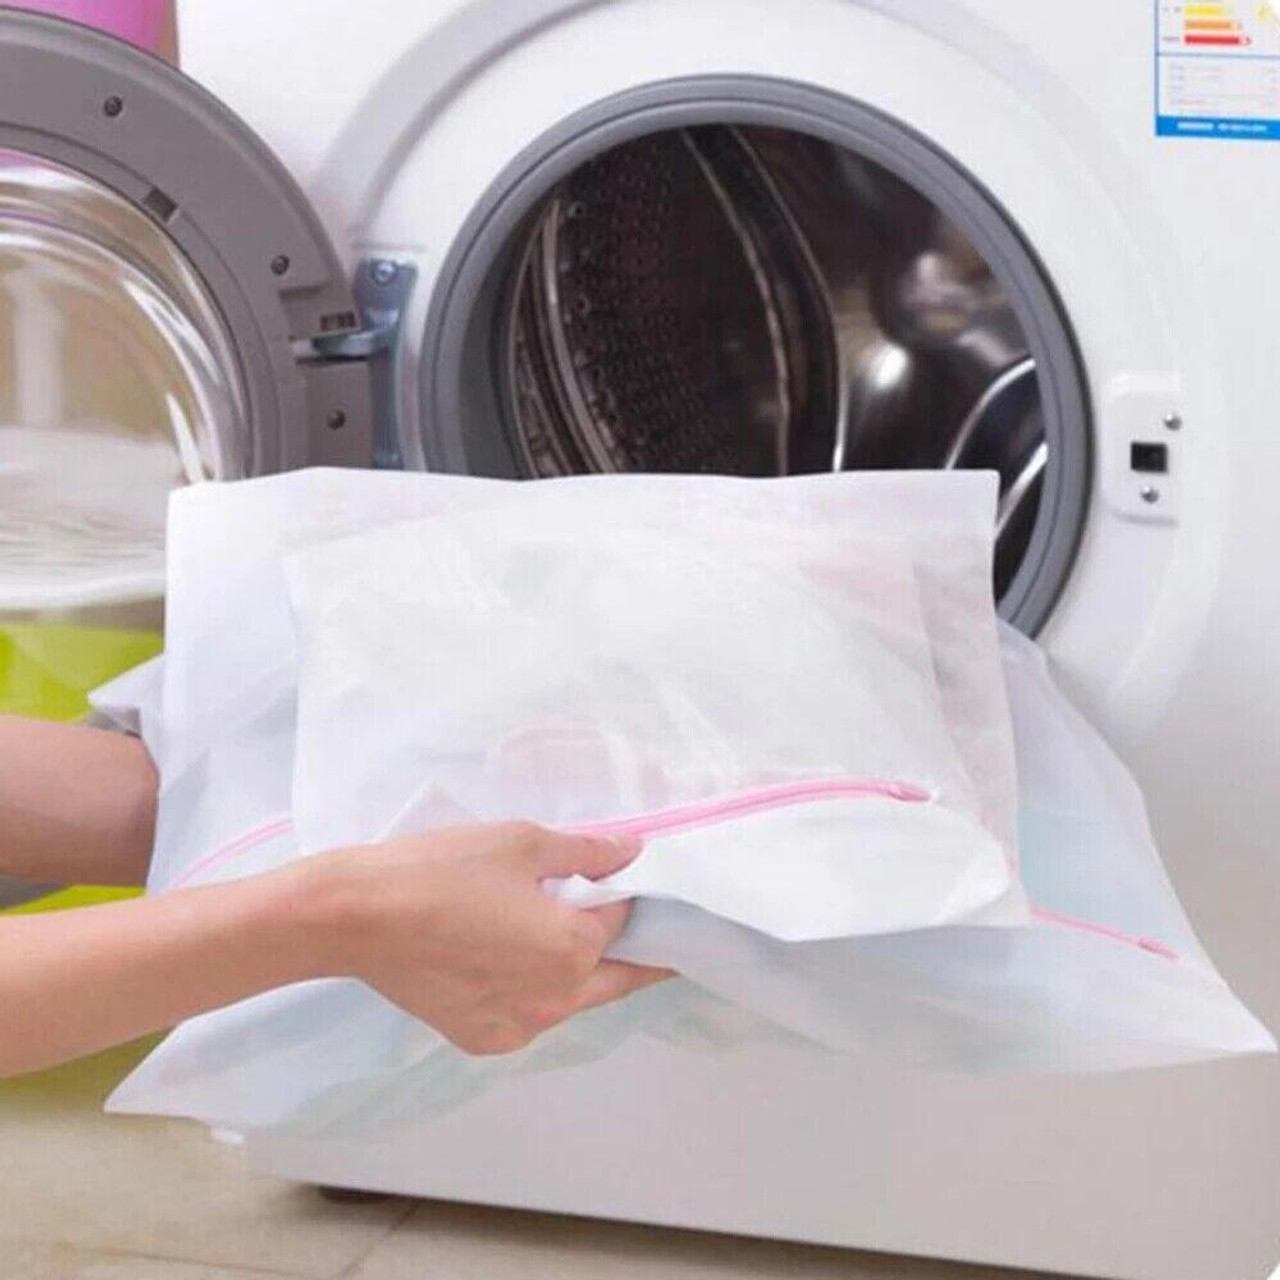 5 Zipped Wash Bag Mesh Net Laundry Washing Machine Lingerie